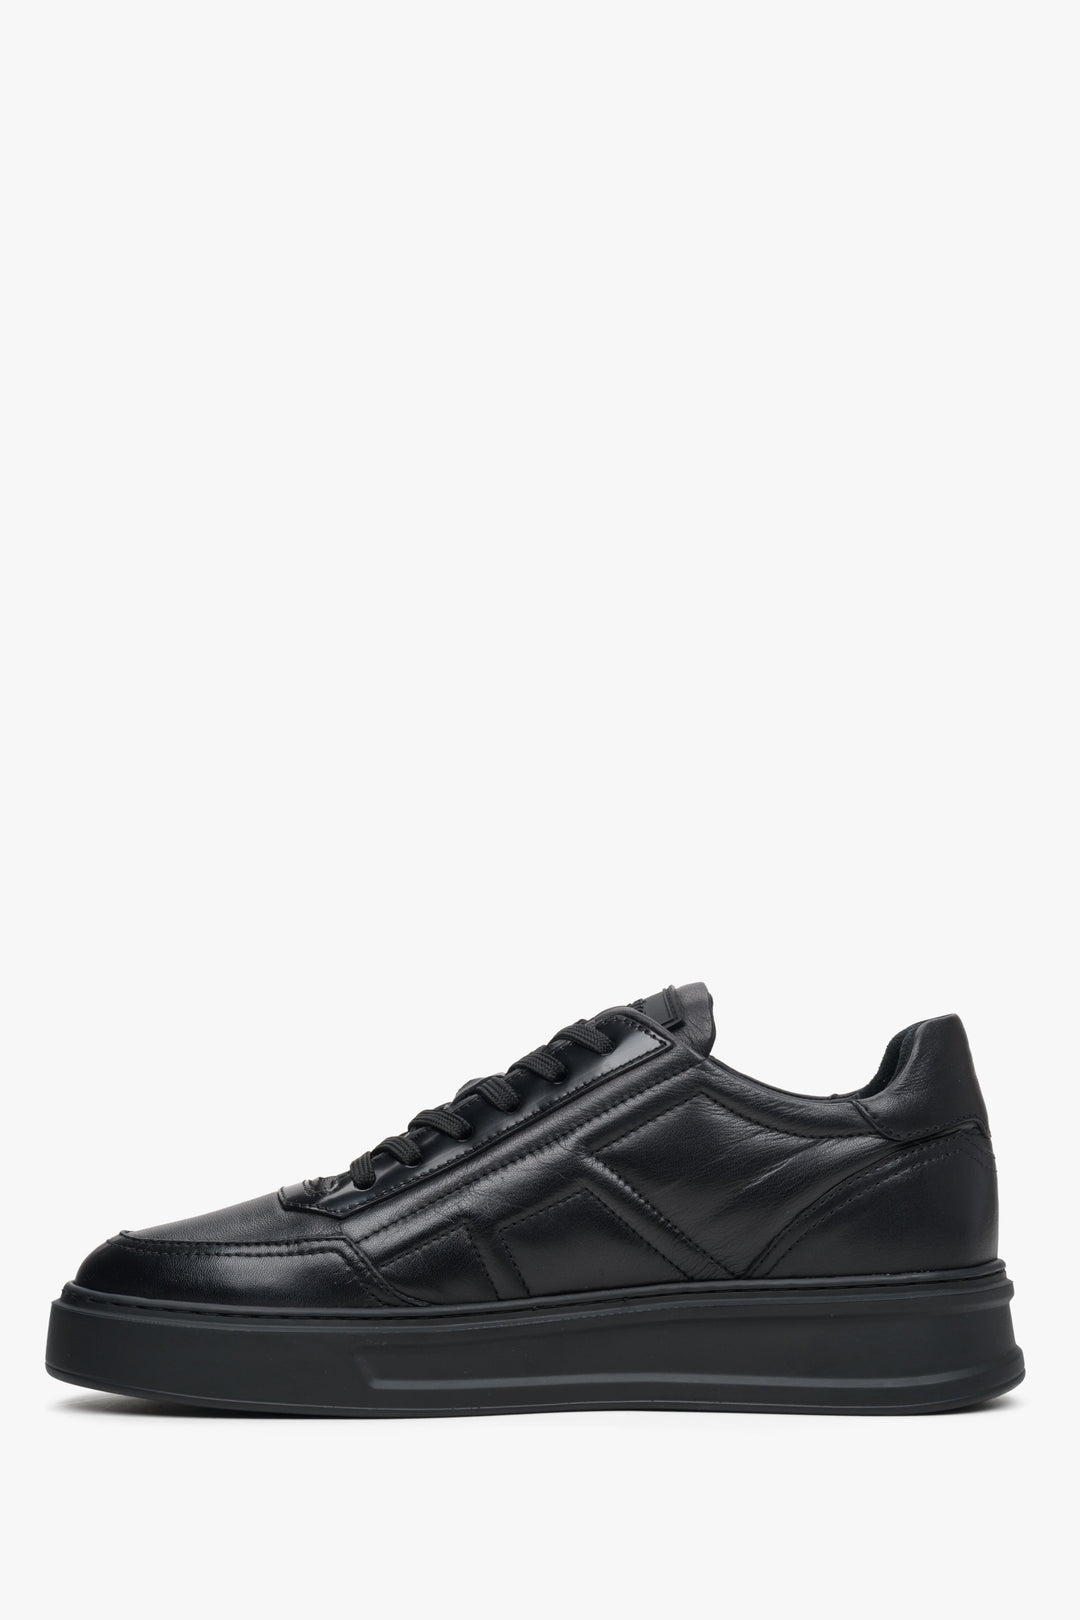 Men's black leather  sneakers by Estro - shoe profile.